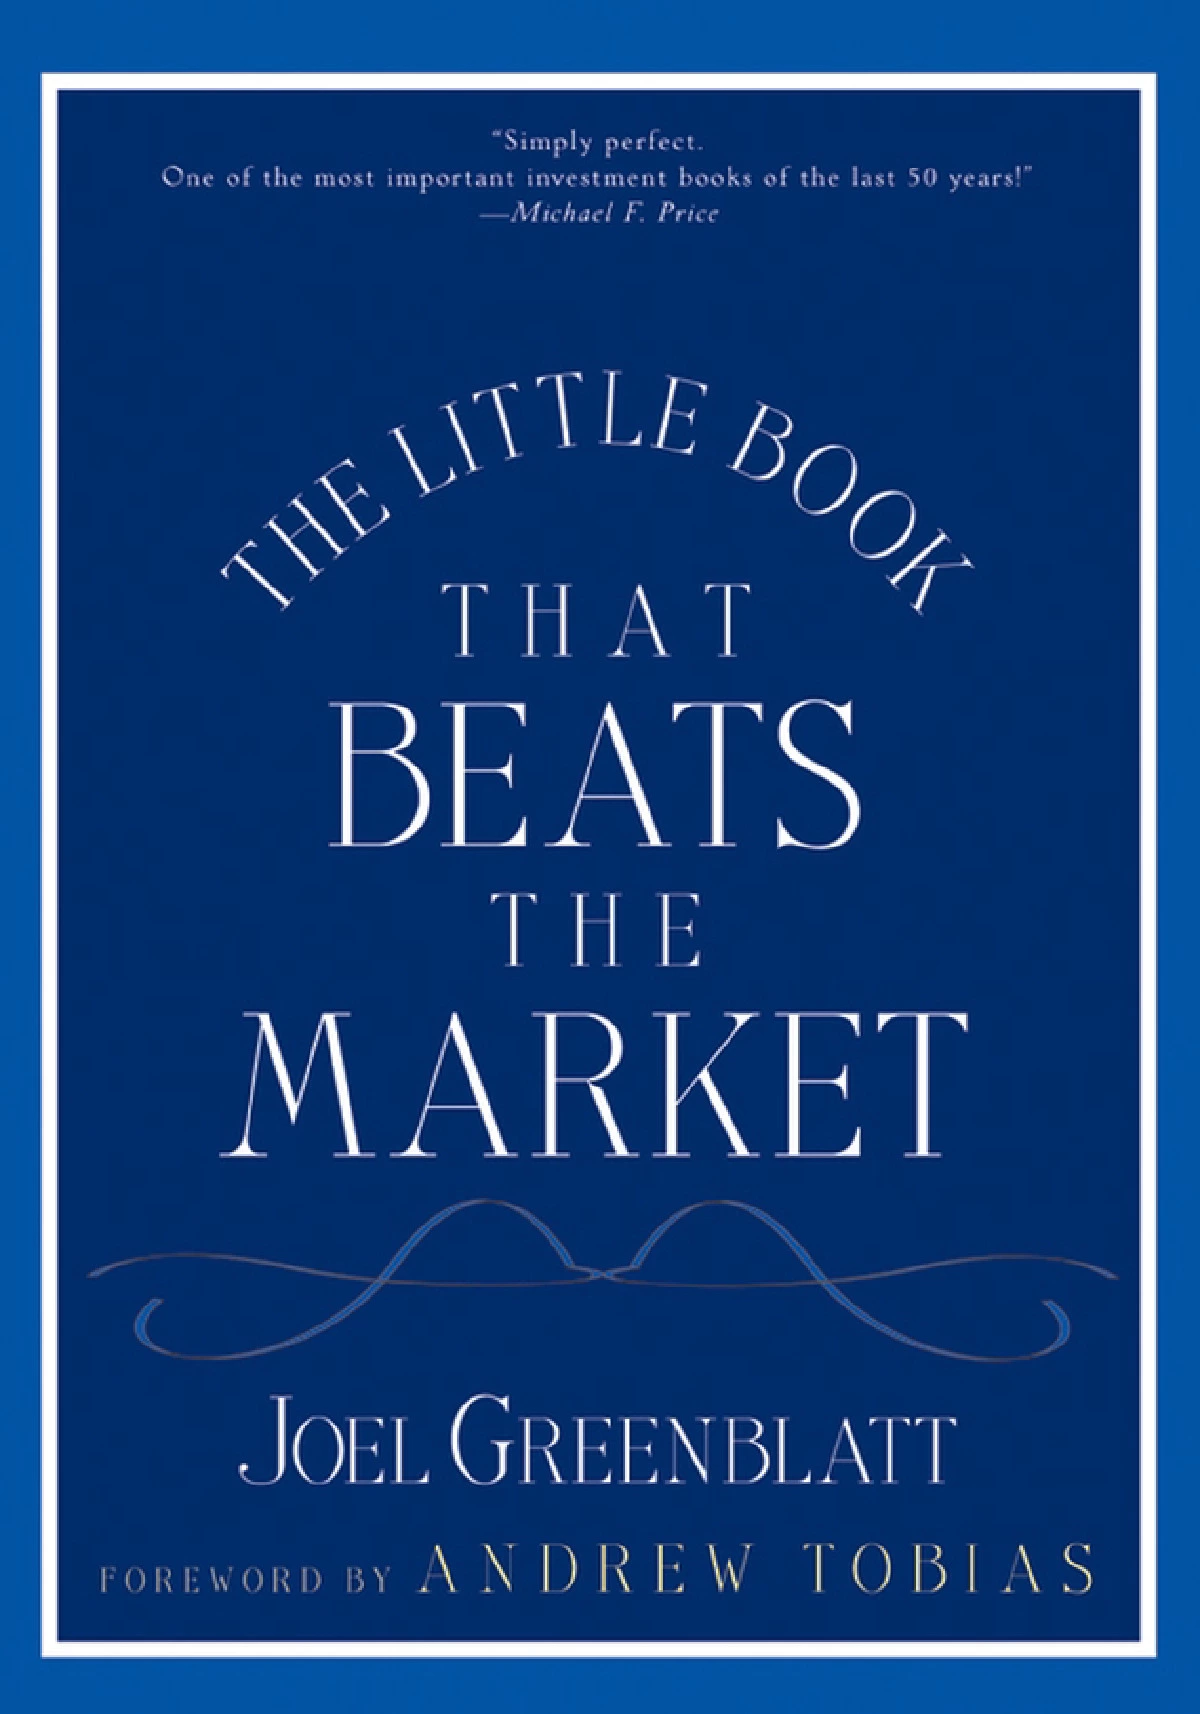 The Little Book That Beats the Market by Joel Greenblatt